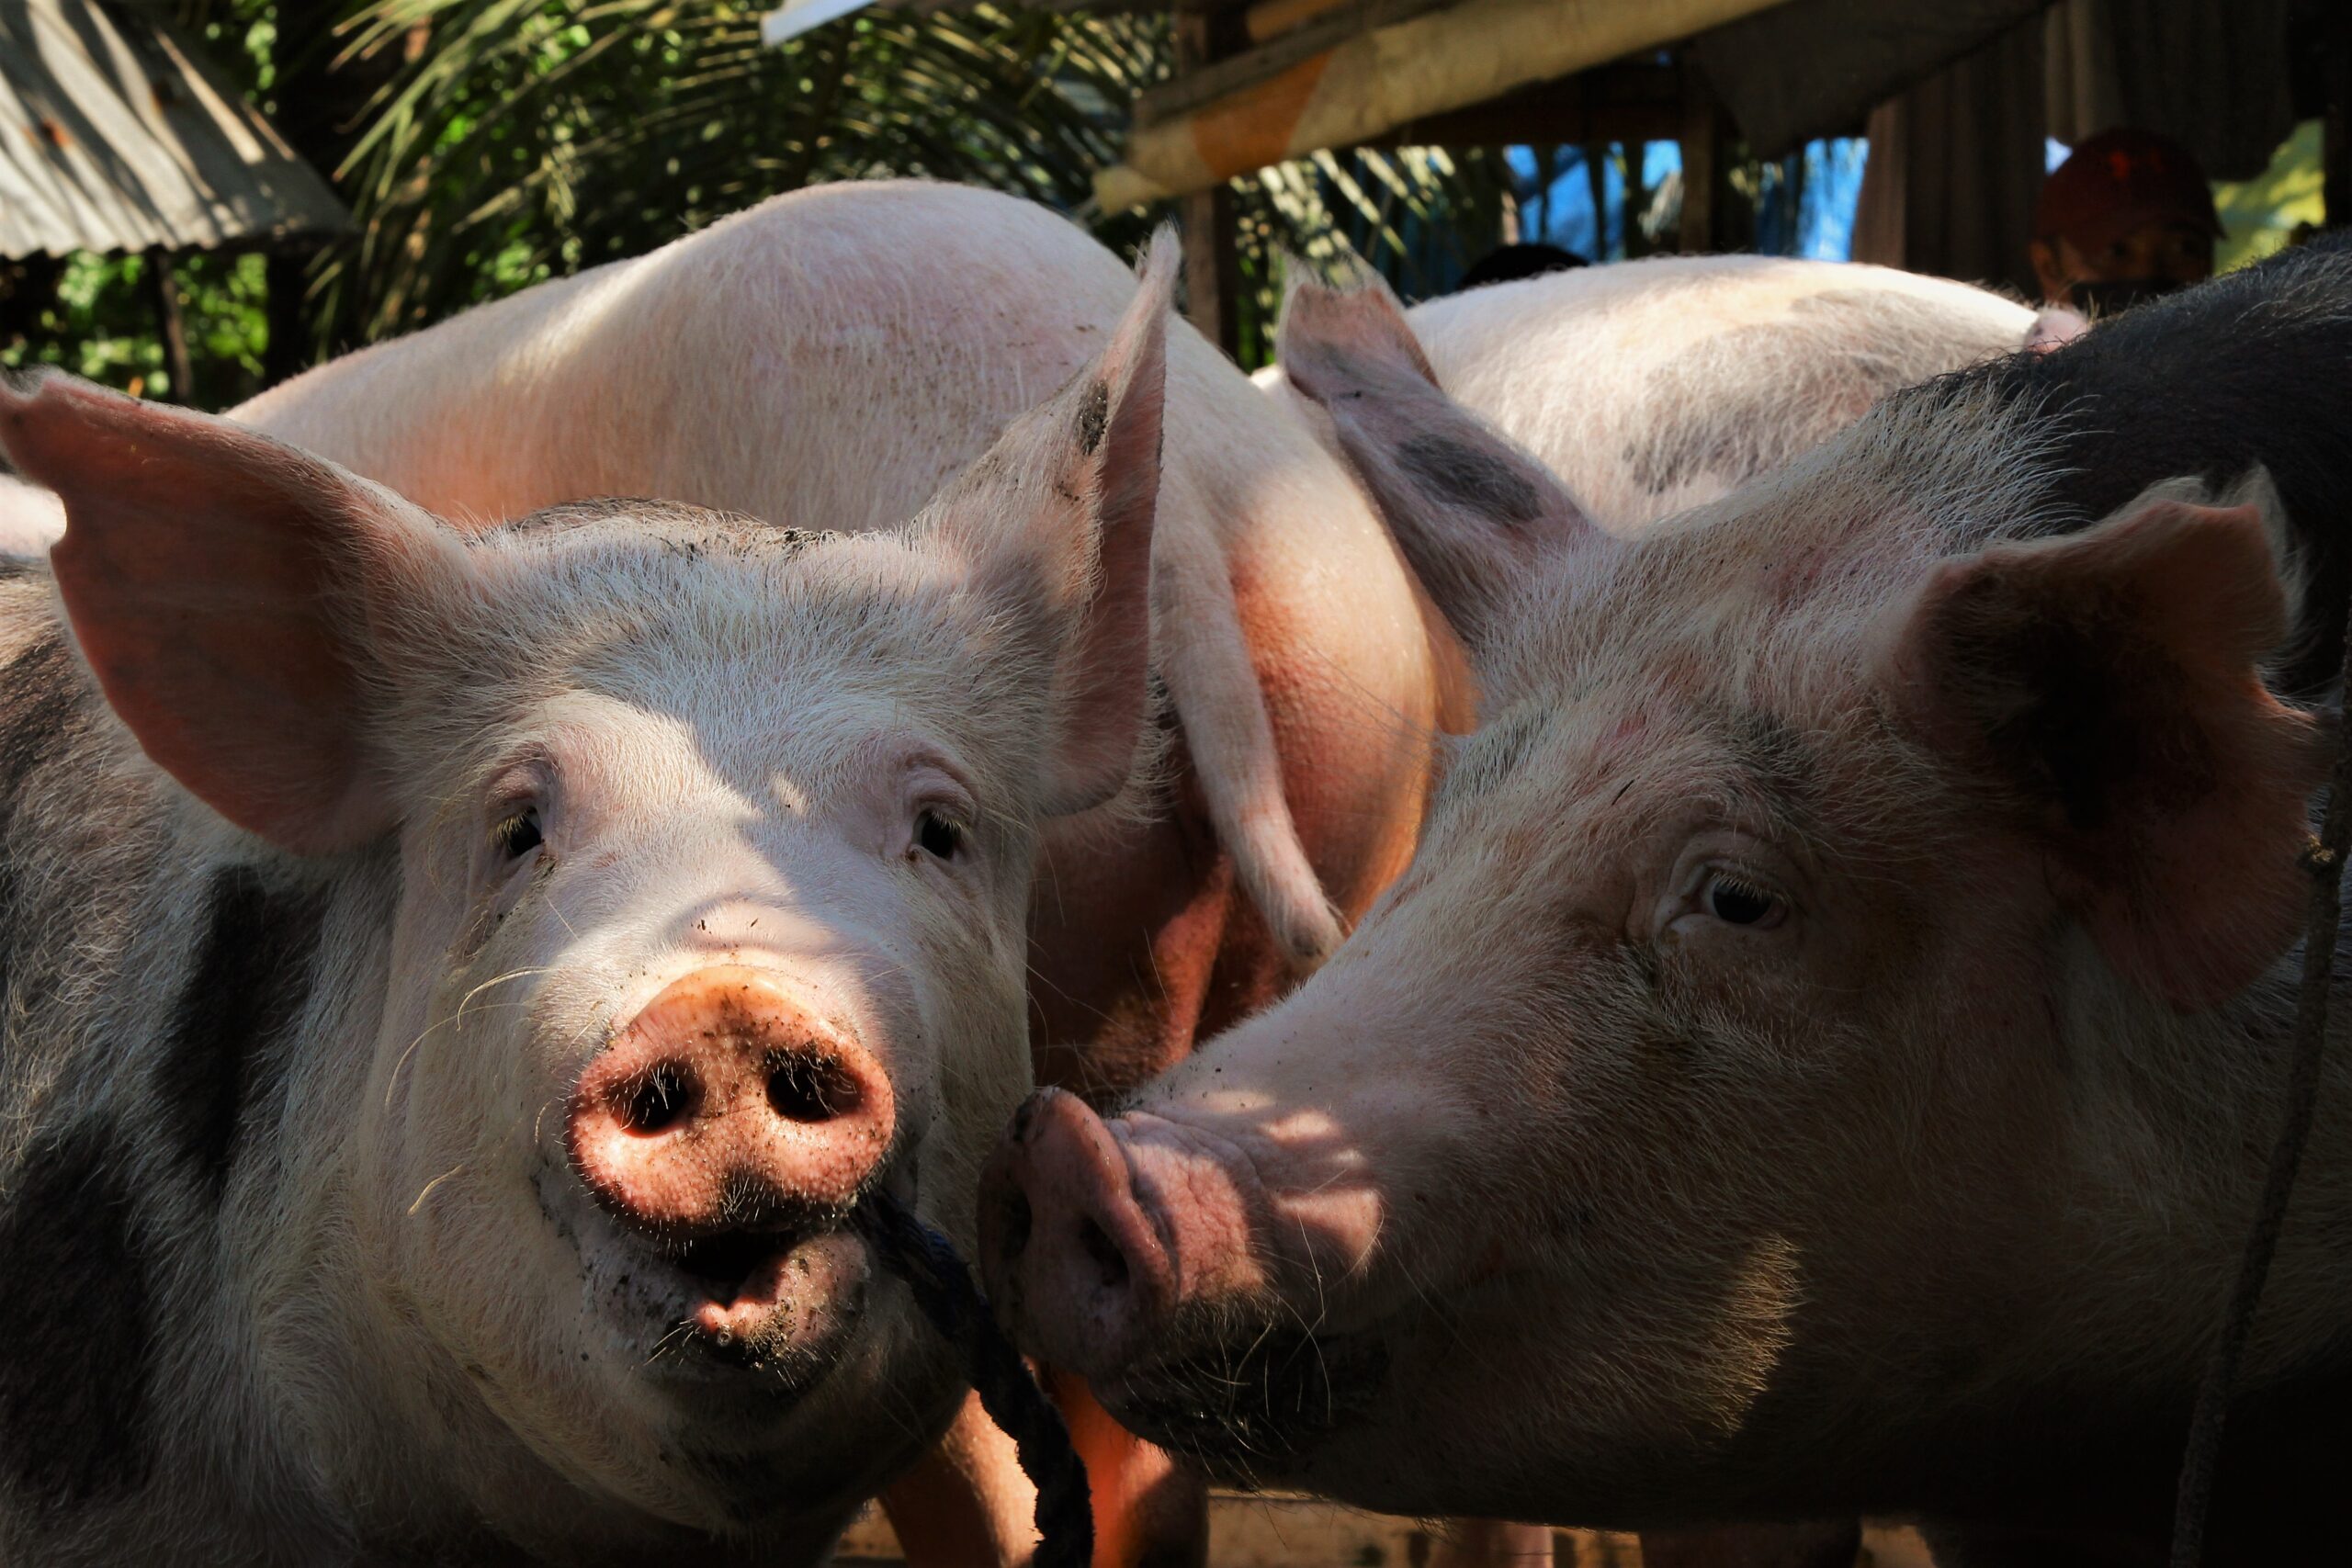 Ban on Zamboanga hogs pushes pork demand  in Cagayan de Oro, Misamis Oriental